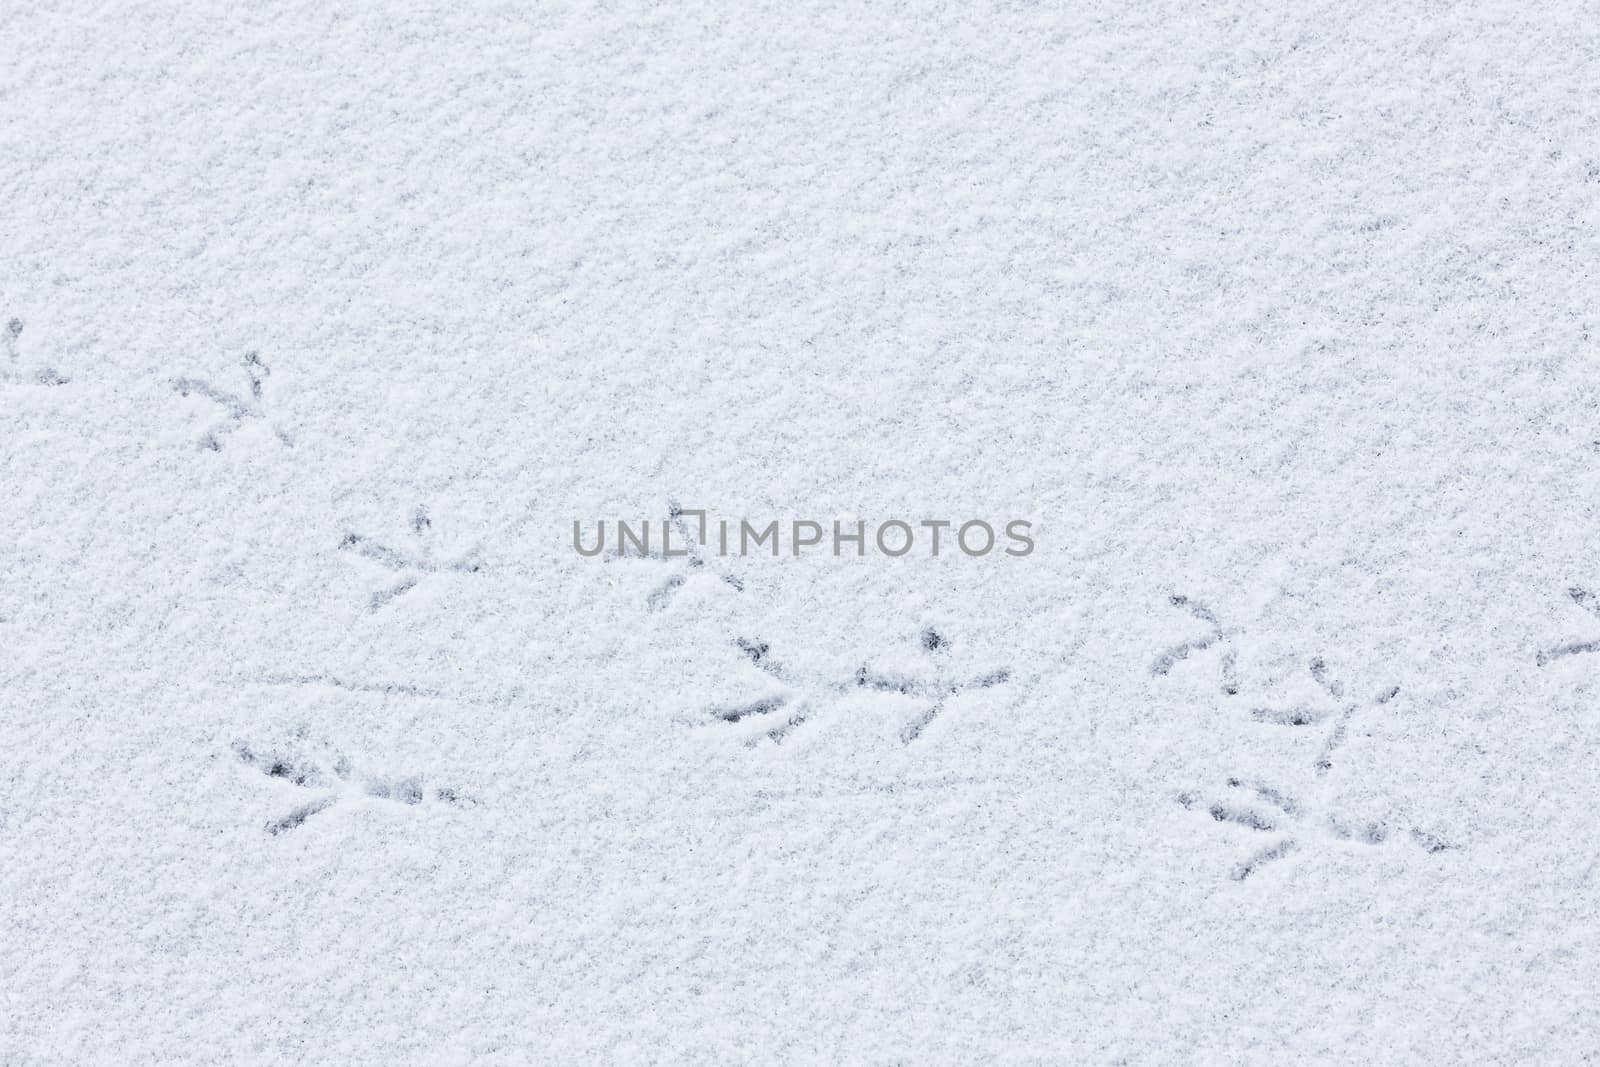 Bird tracks on snow by juhku